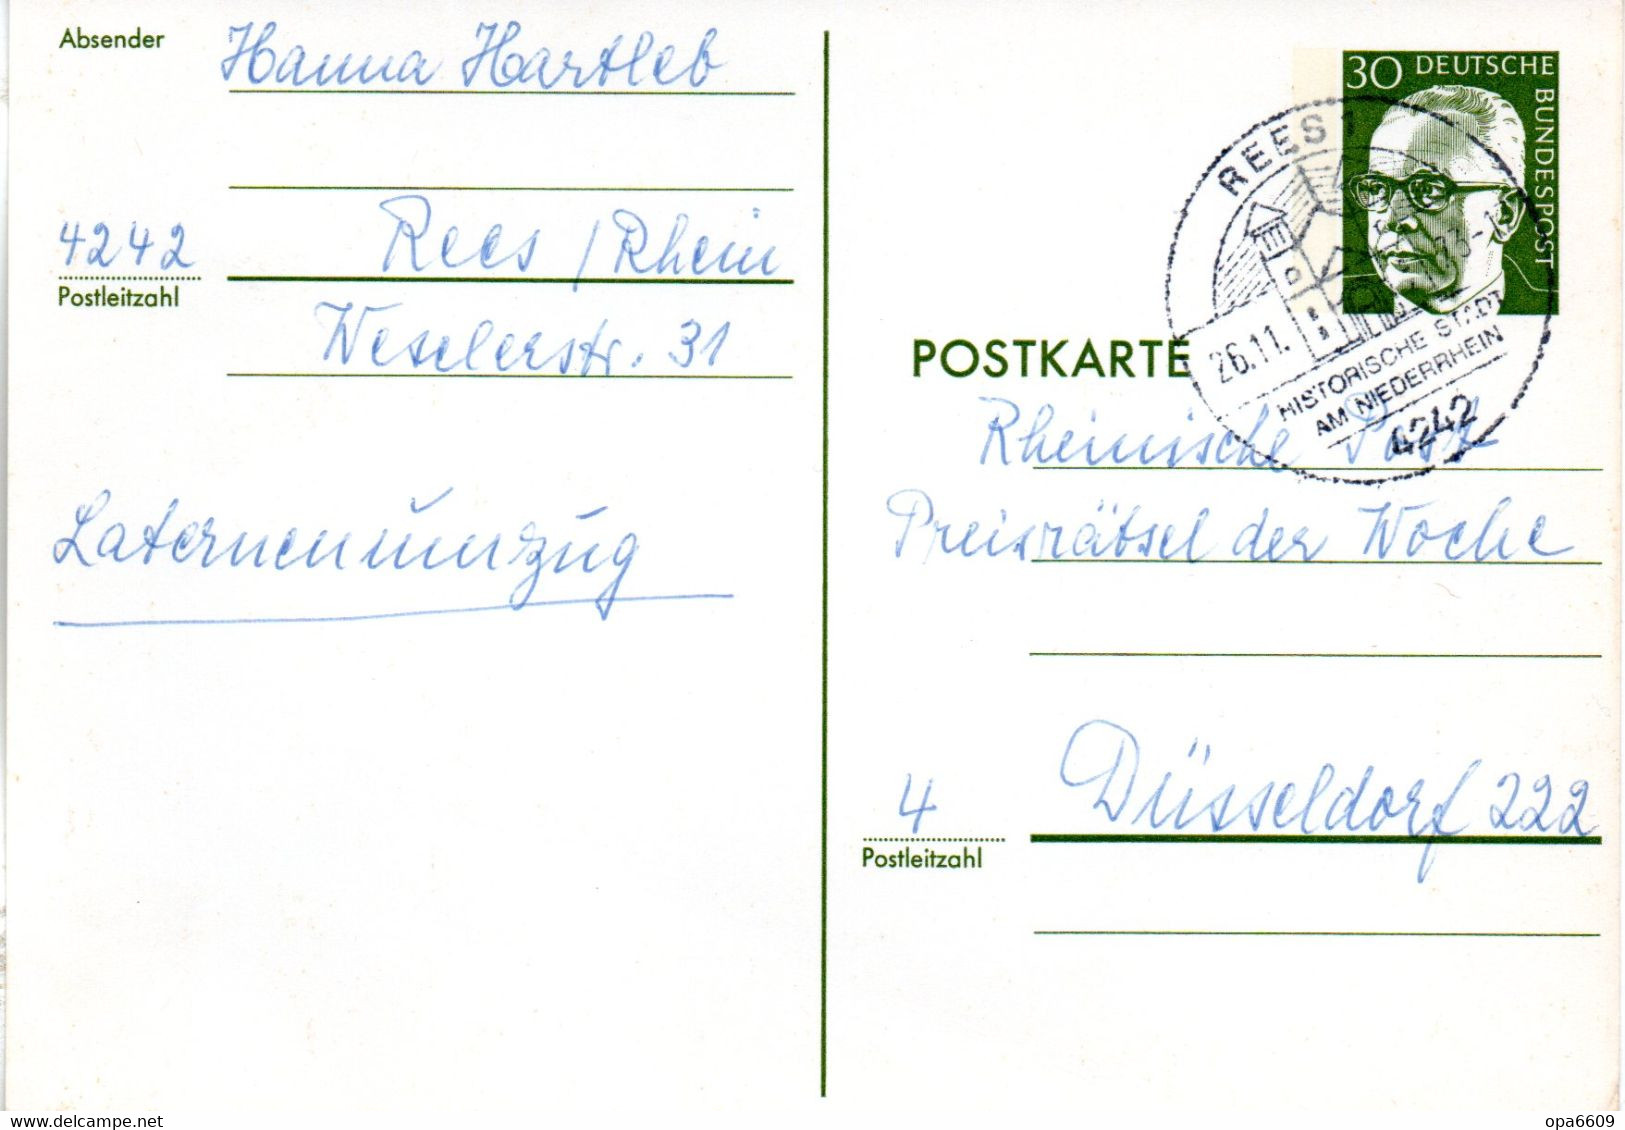 BRD Amtl.Ganzs.-Postkarte P 110b WSt."Bundespräsident Dr. Gustav Heinemann" 30 (Pf) Grün, SSt 26.11.74 REES - Postkarten - Gebraucht